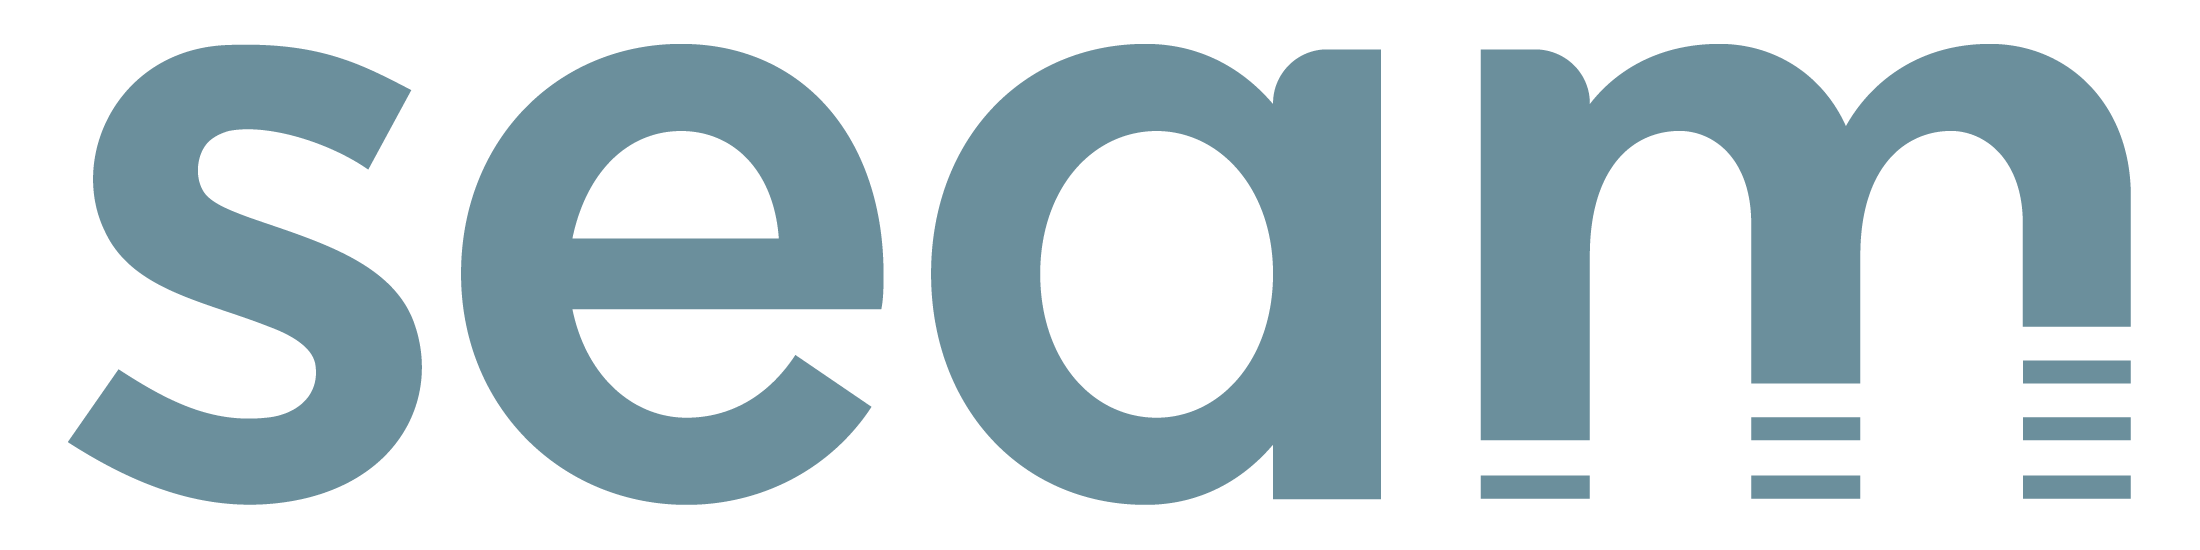 SEAM, Inc. logo